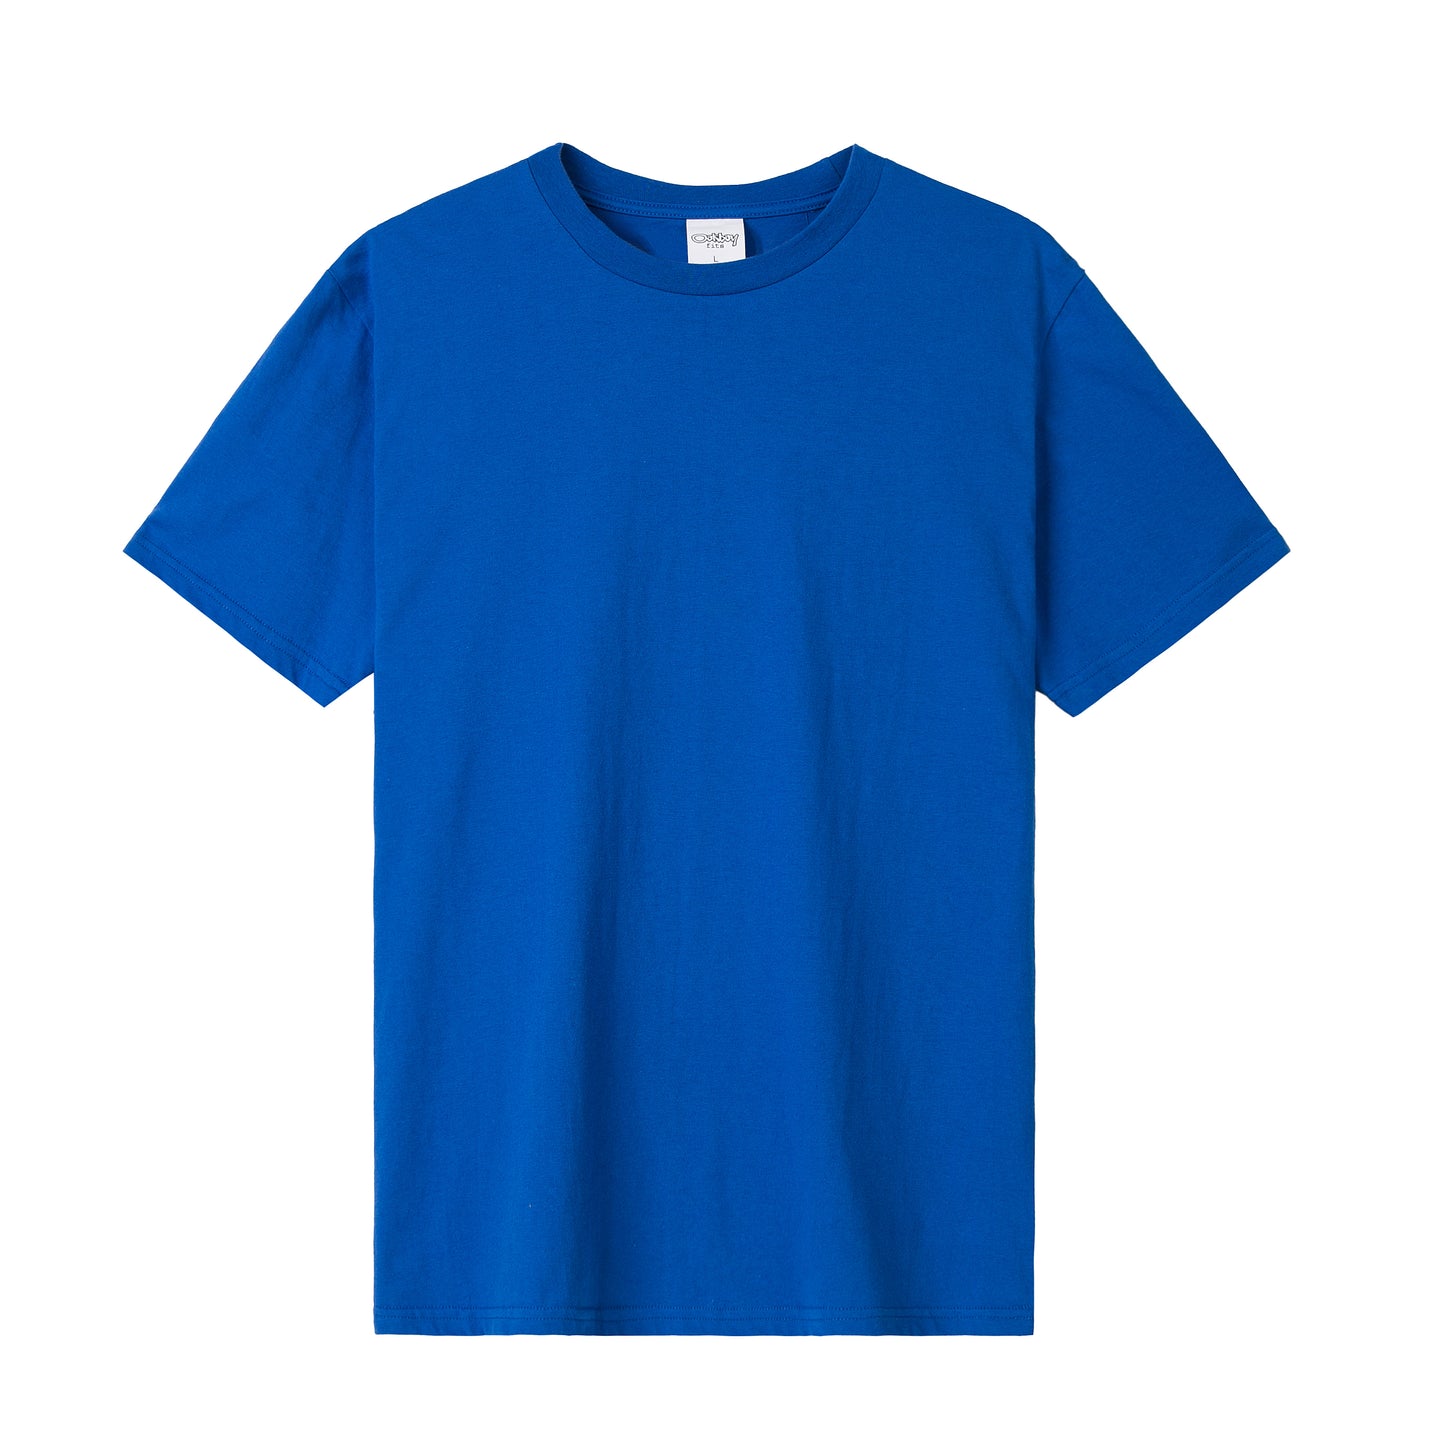 Factory Box Sales 80 PCS Box Cotton T Shirt ($2.75 per PC)